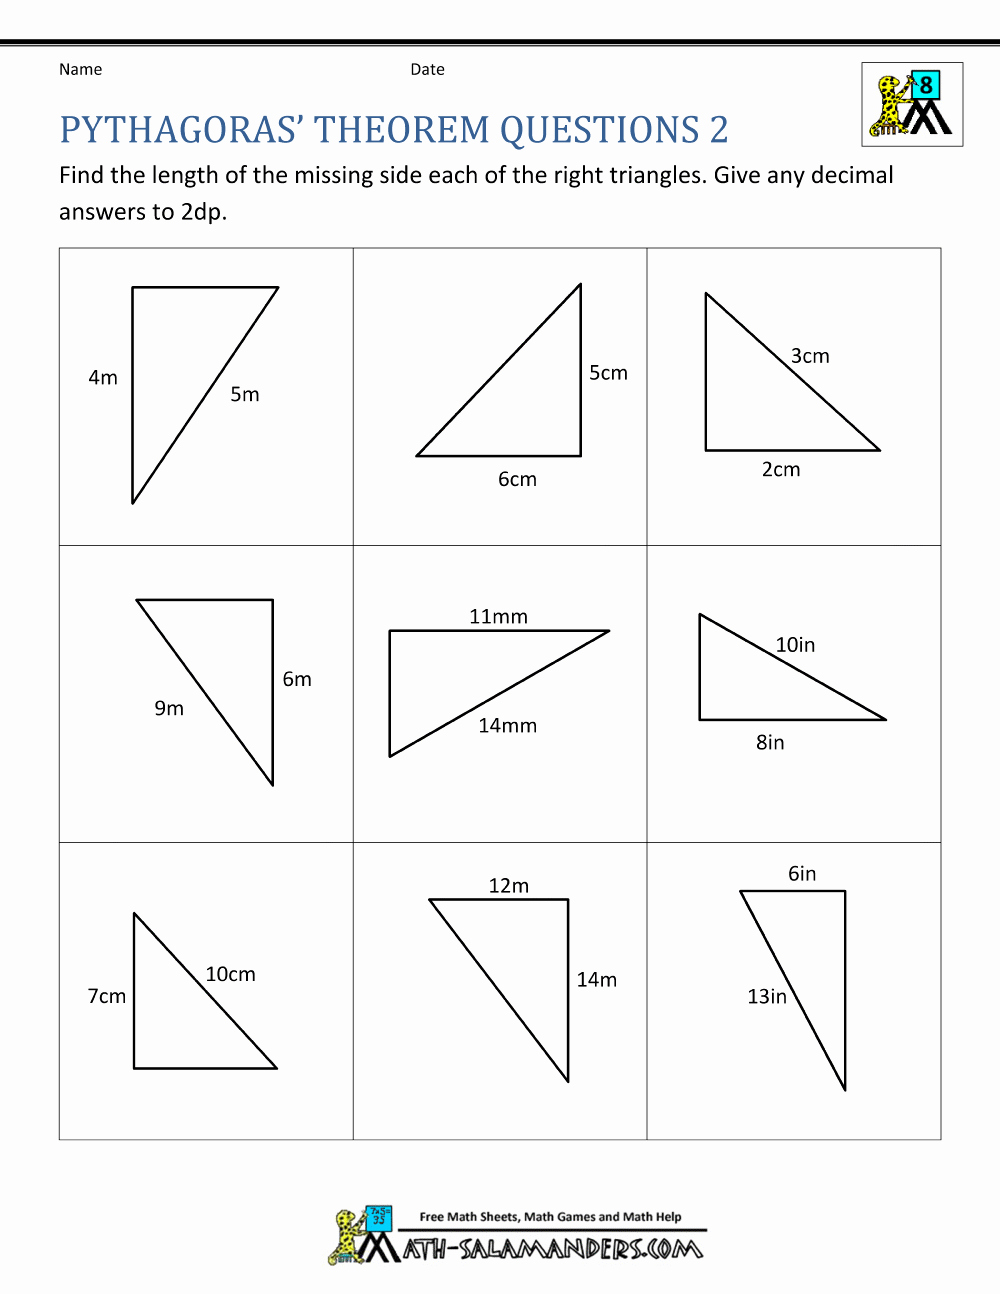 Pythagorean theorem Worksheet Answers Fresh Pythagoras theorem Questions